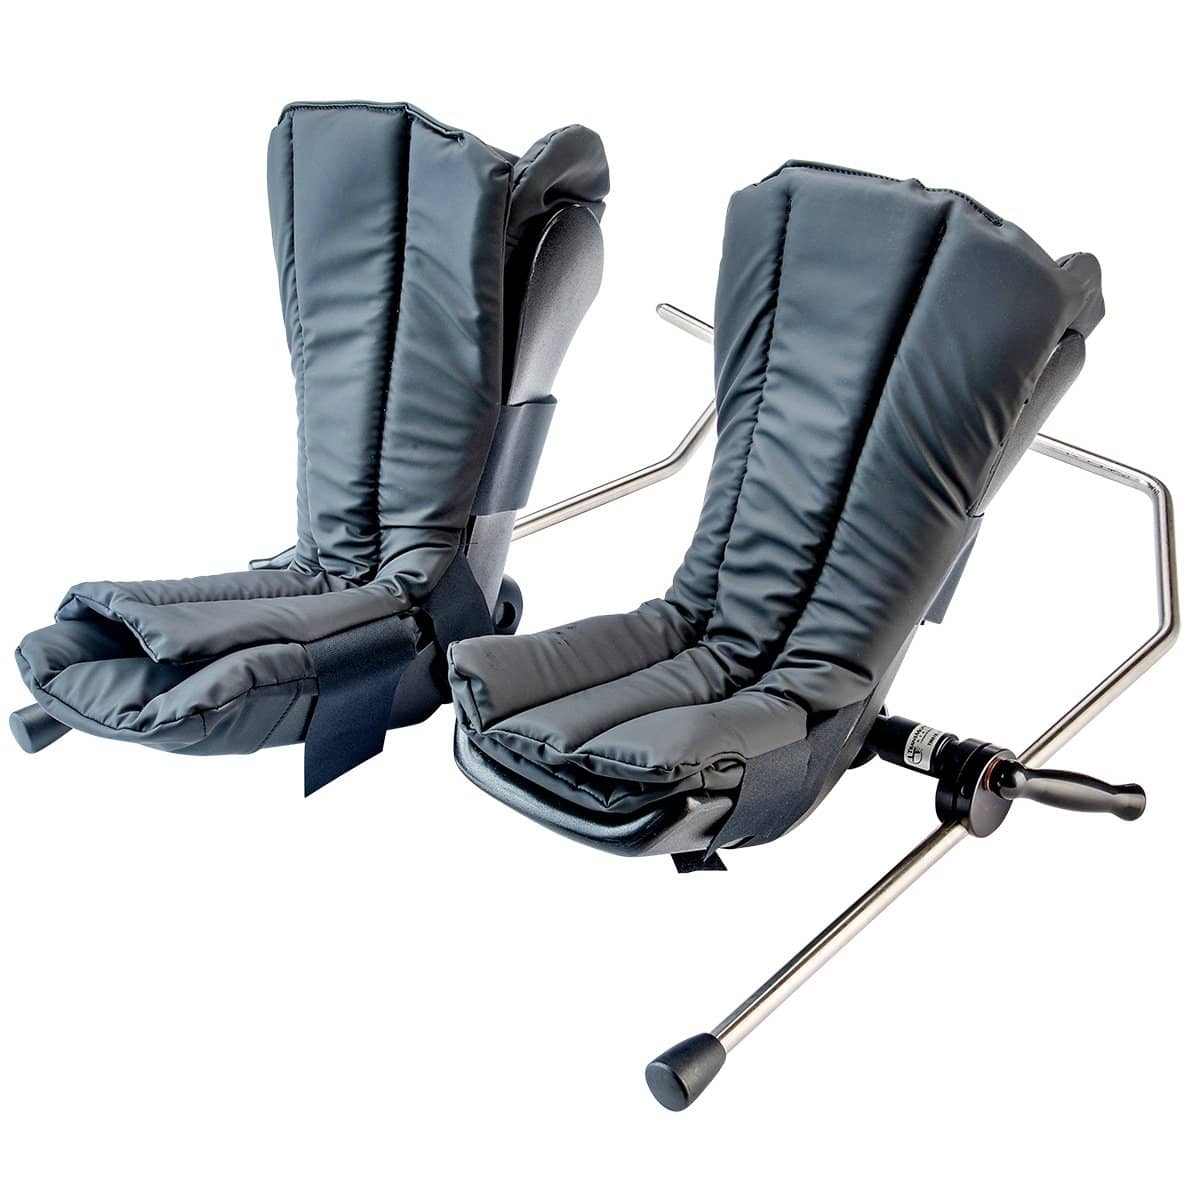 TransMotion Medical Leg Positioning System - Pair